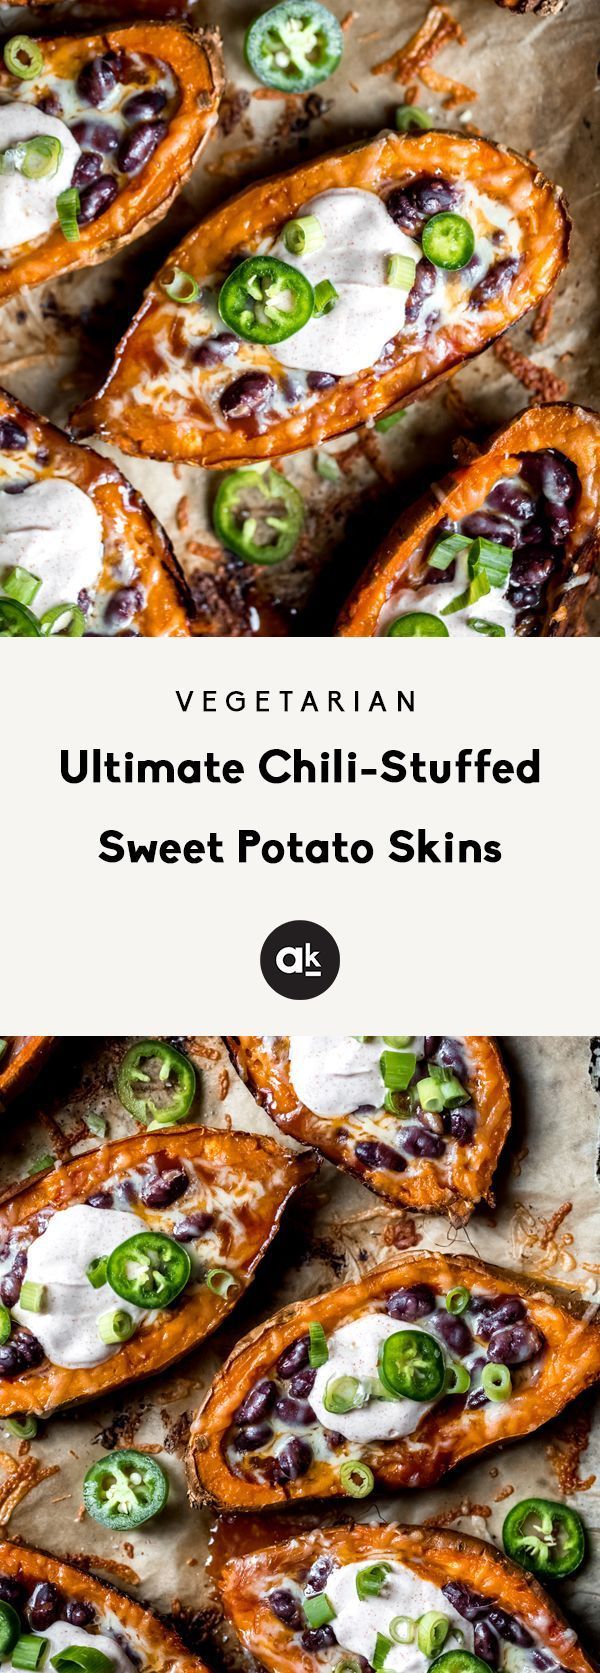 Ultimate Chili-Stuffed Sweet Potato Skins -   15 healthy recipes vegetarian
 ideas